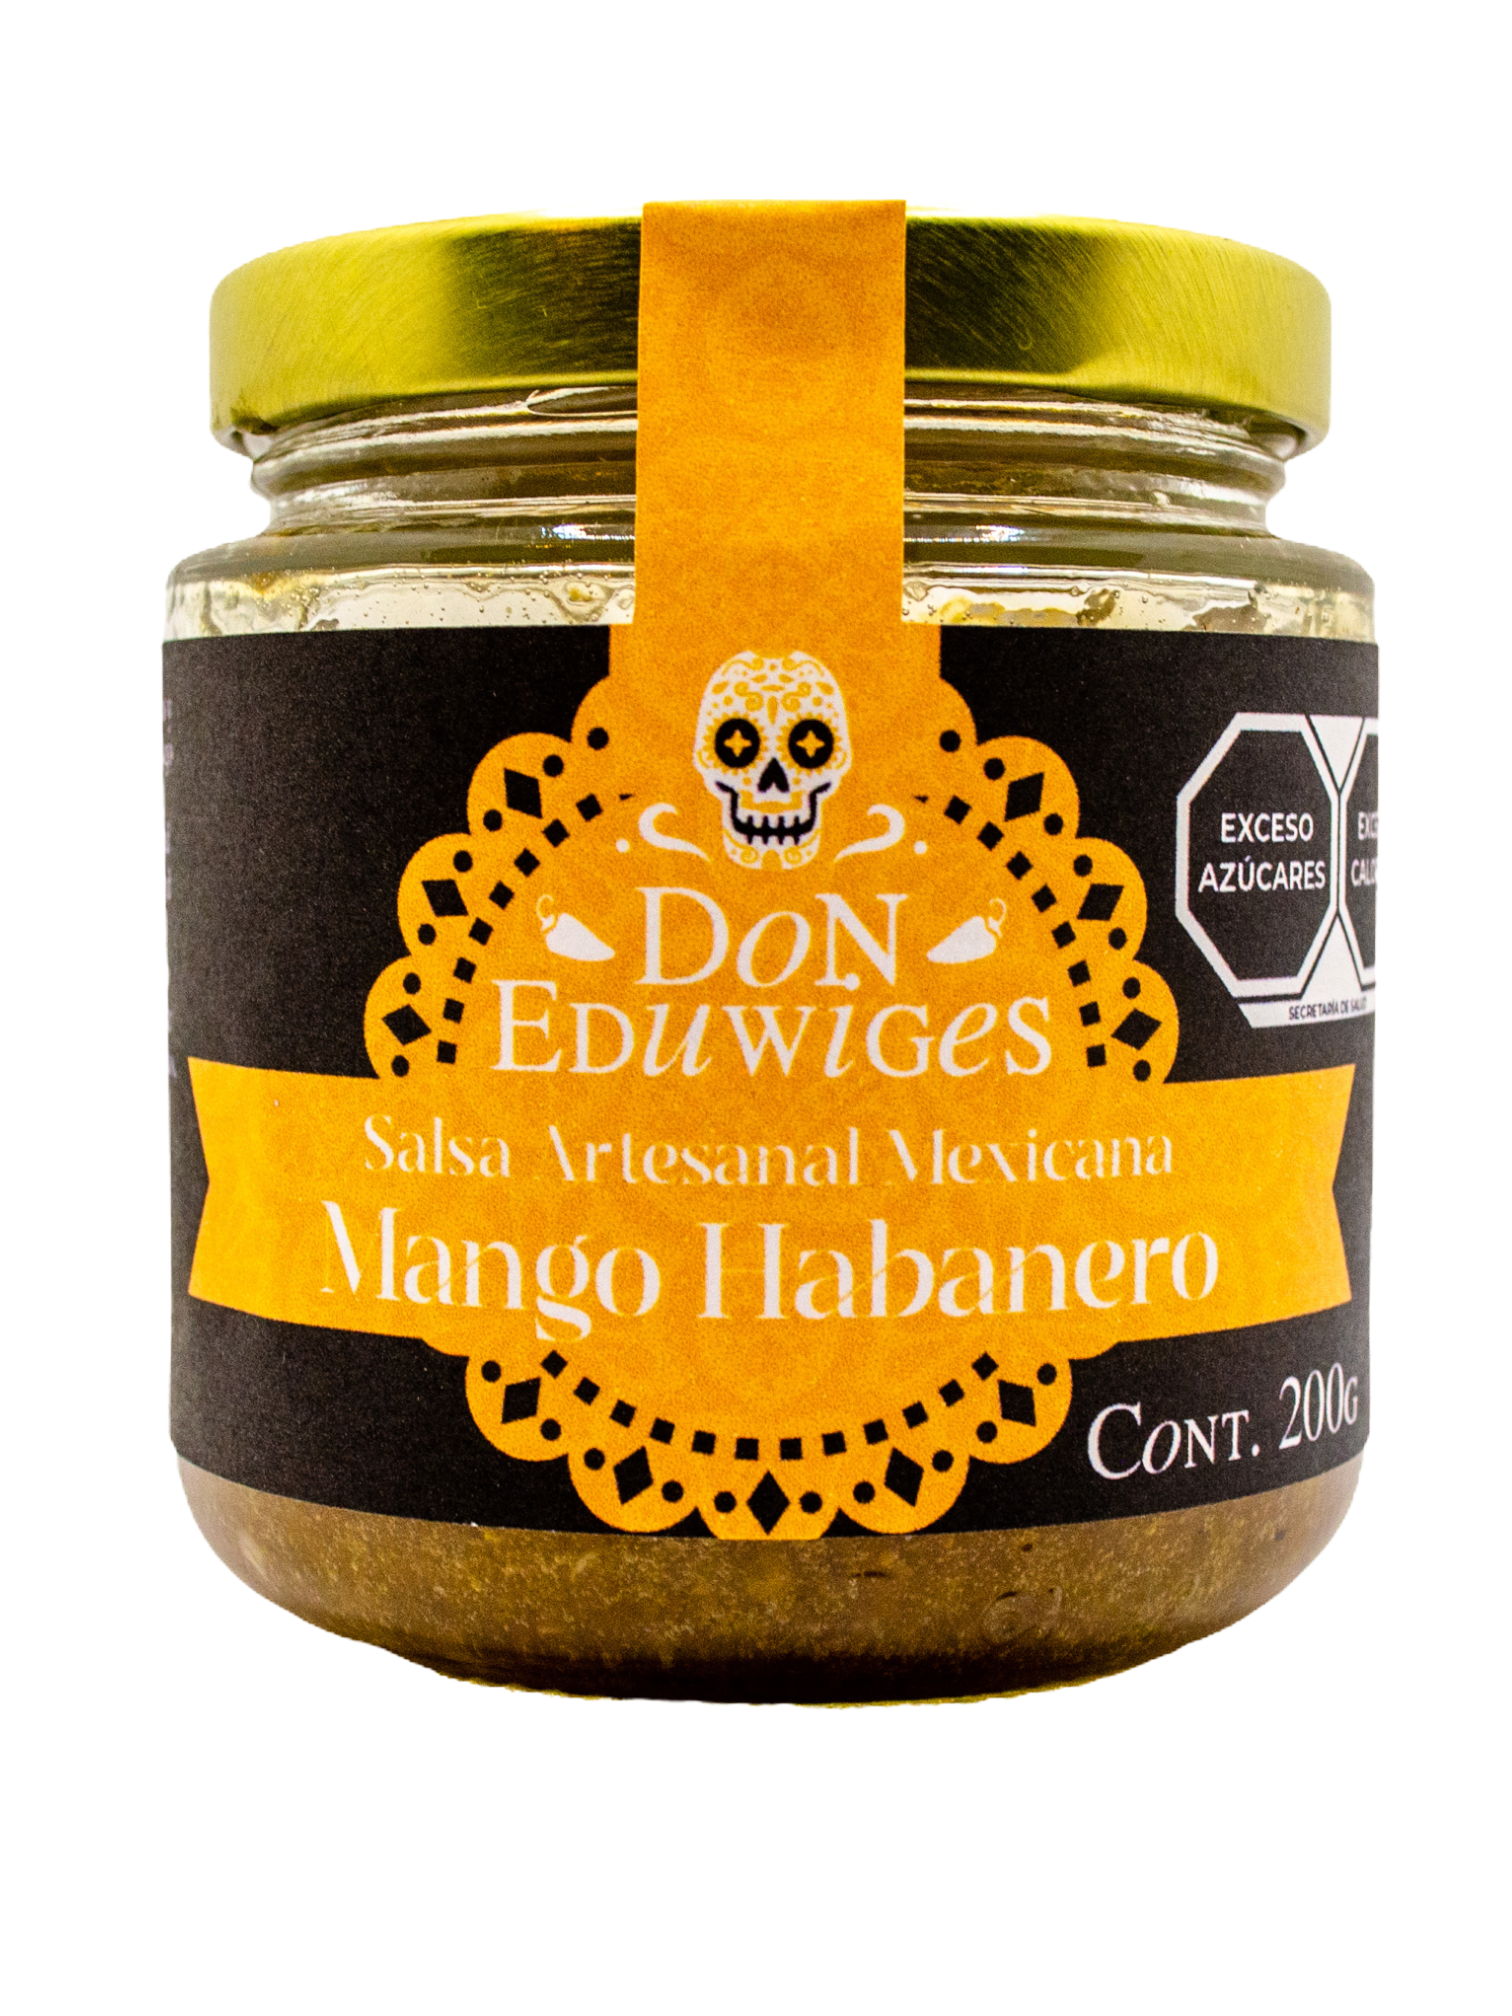 Salsa Mango Habanero